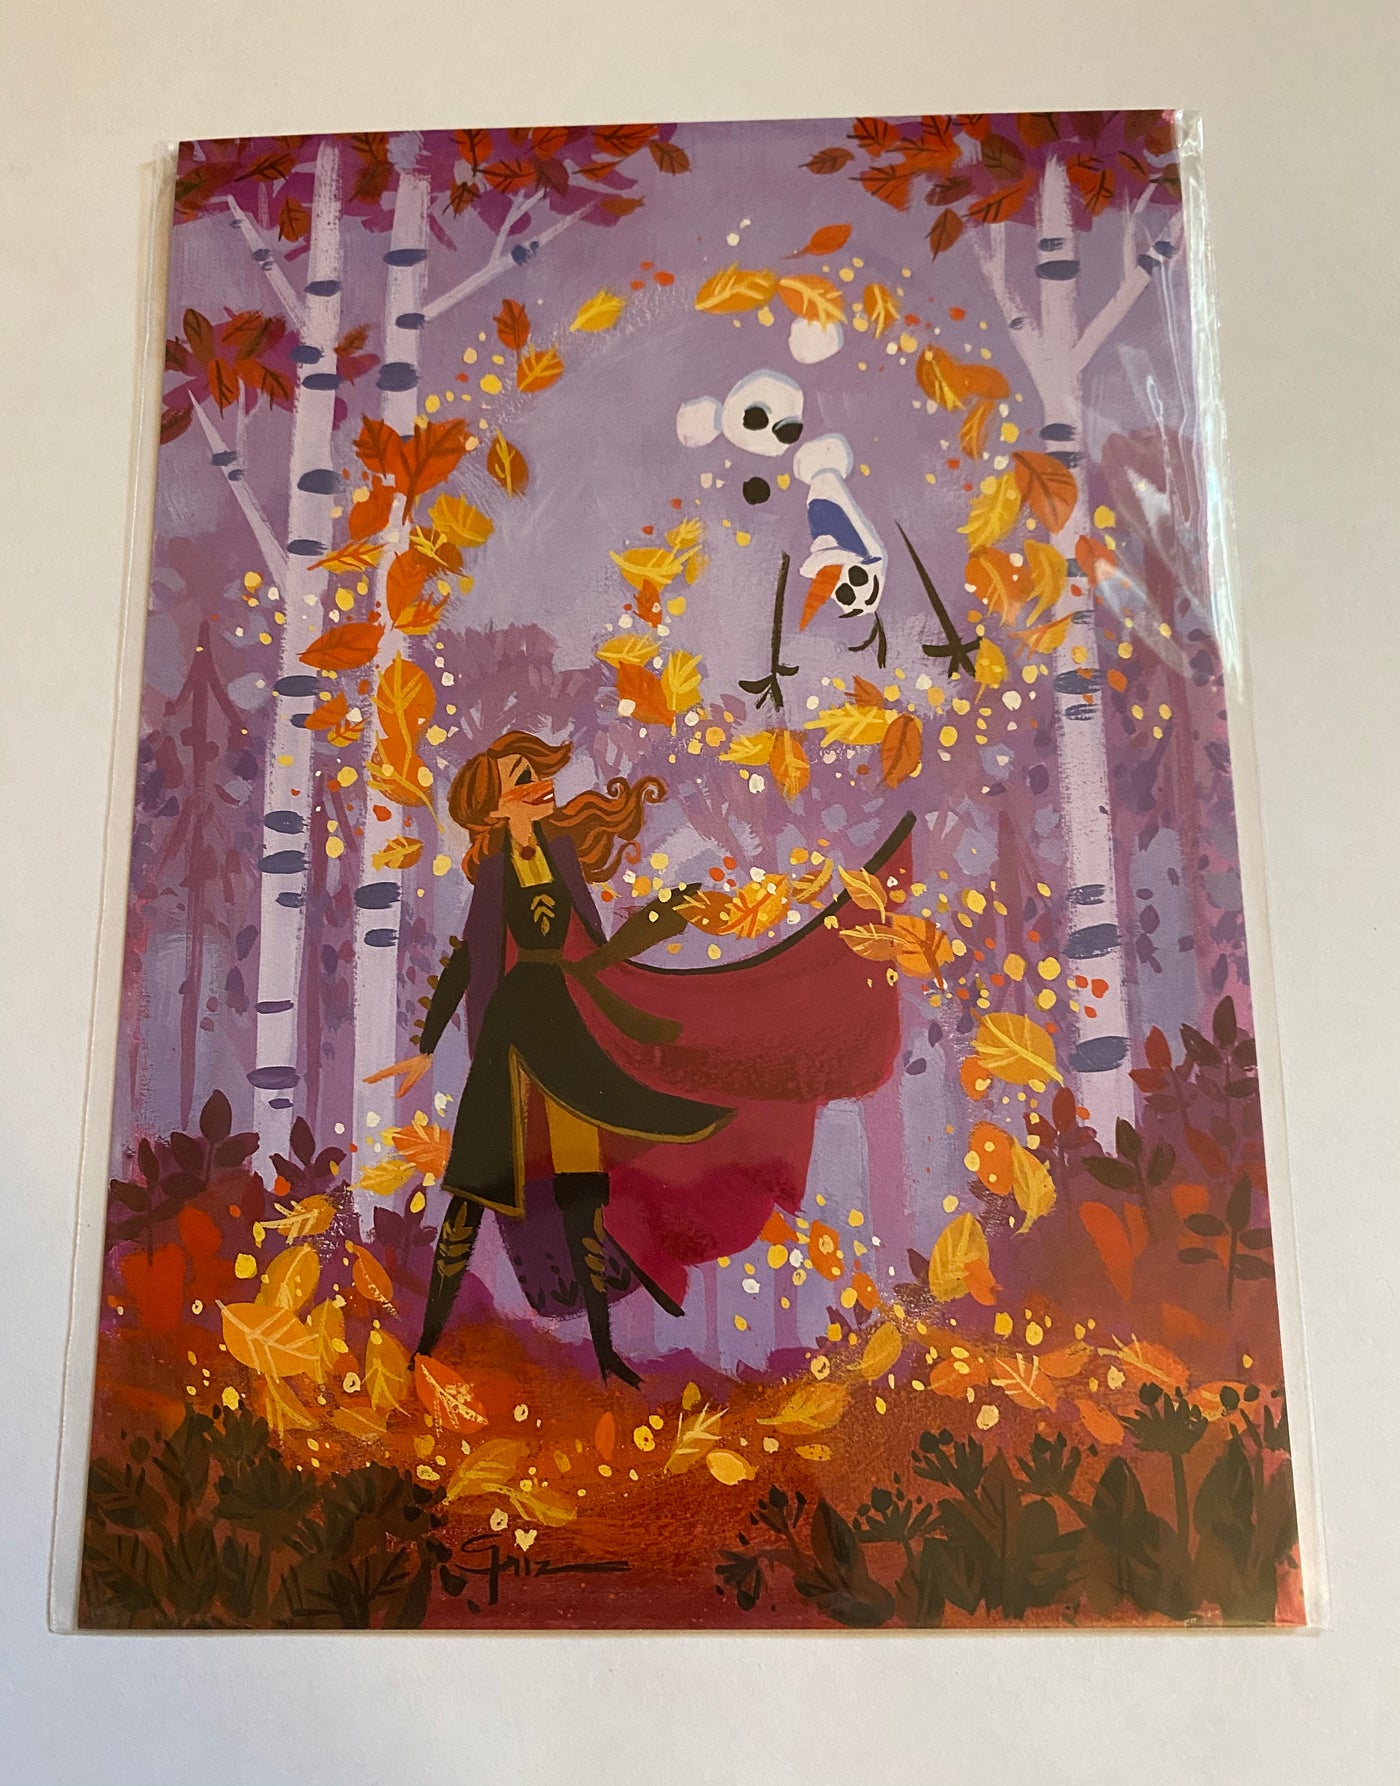 Disney Frozen Anna Olaf Gale by Griselda Sastrawinata Postcard Wonderground New